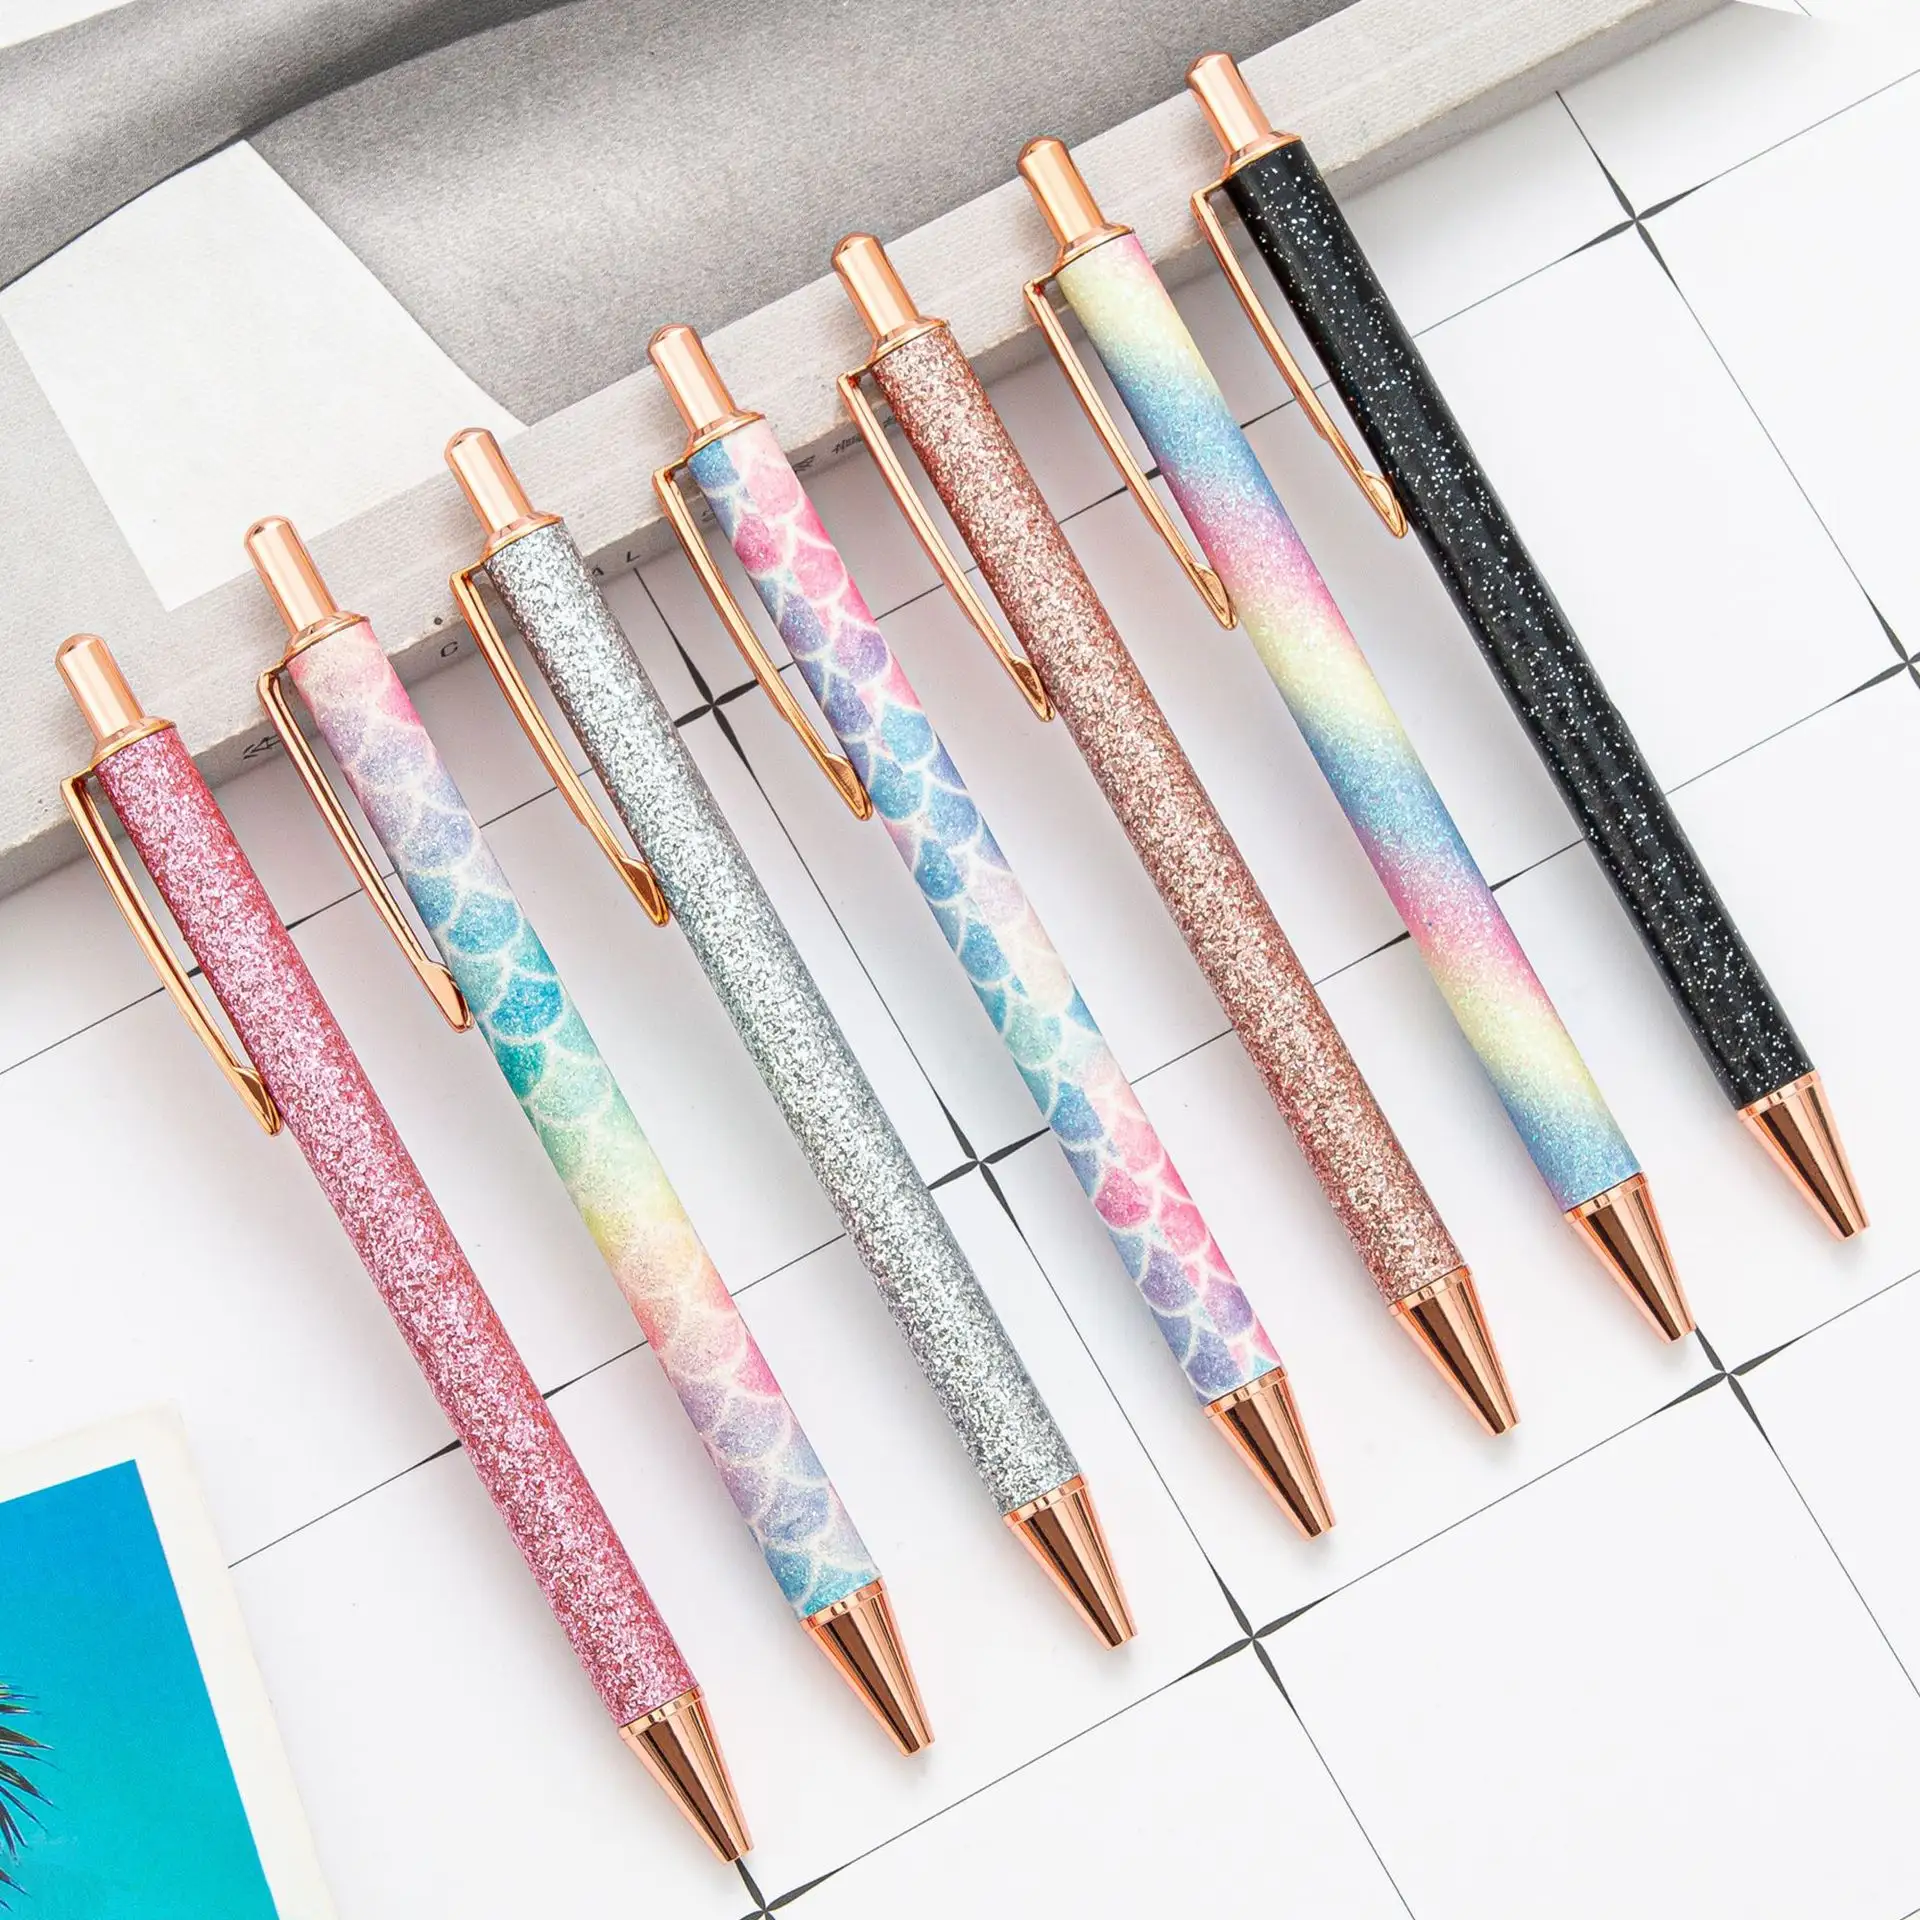 Spot wholesale creative gifts Gold pink free samples Press metal pens with custom logo Metal advertising ballpoint pen